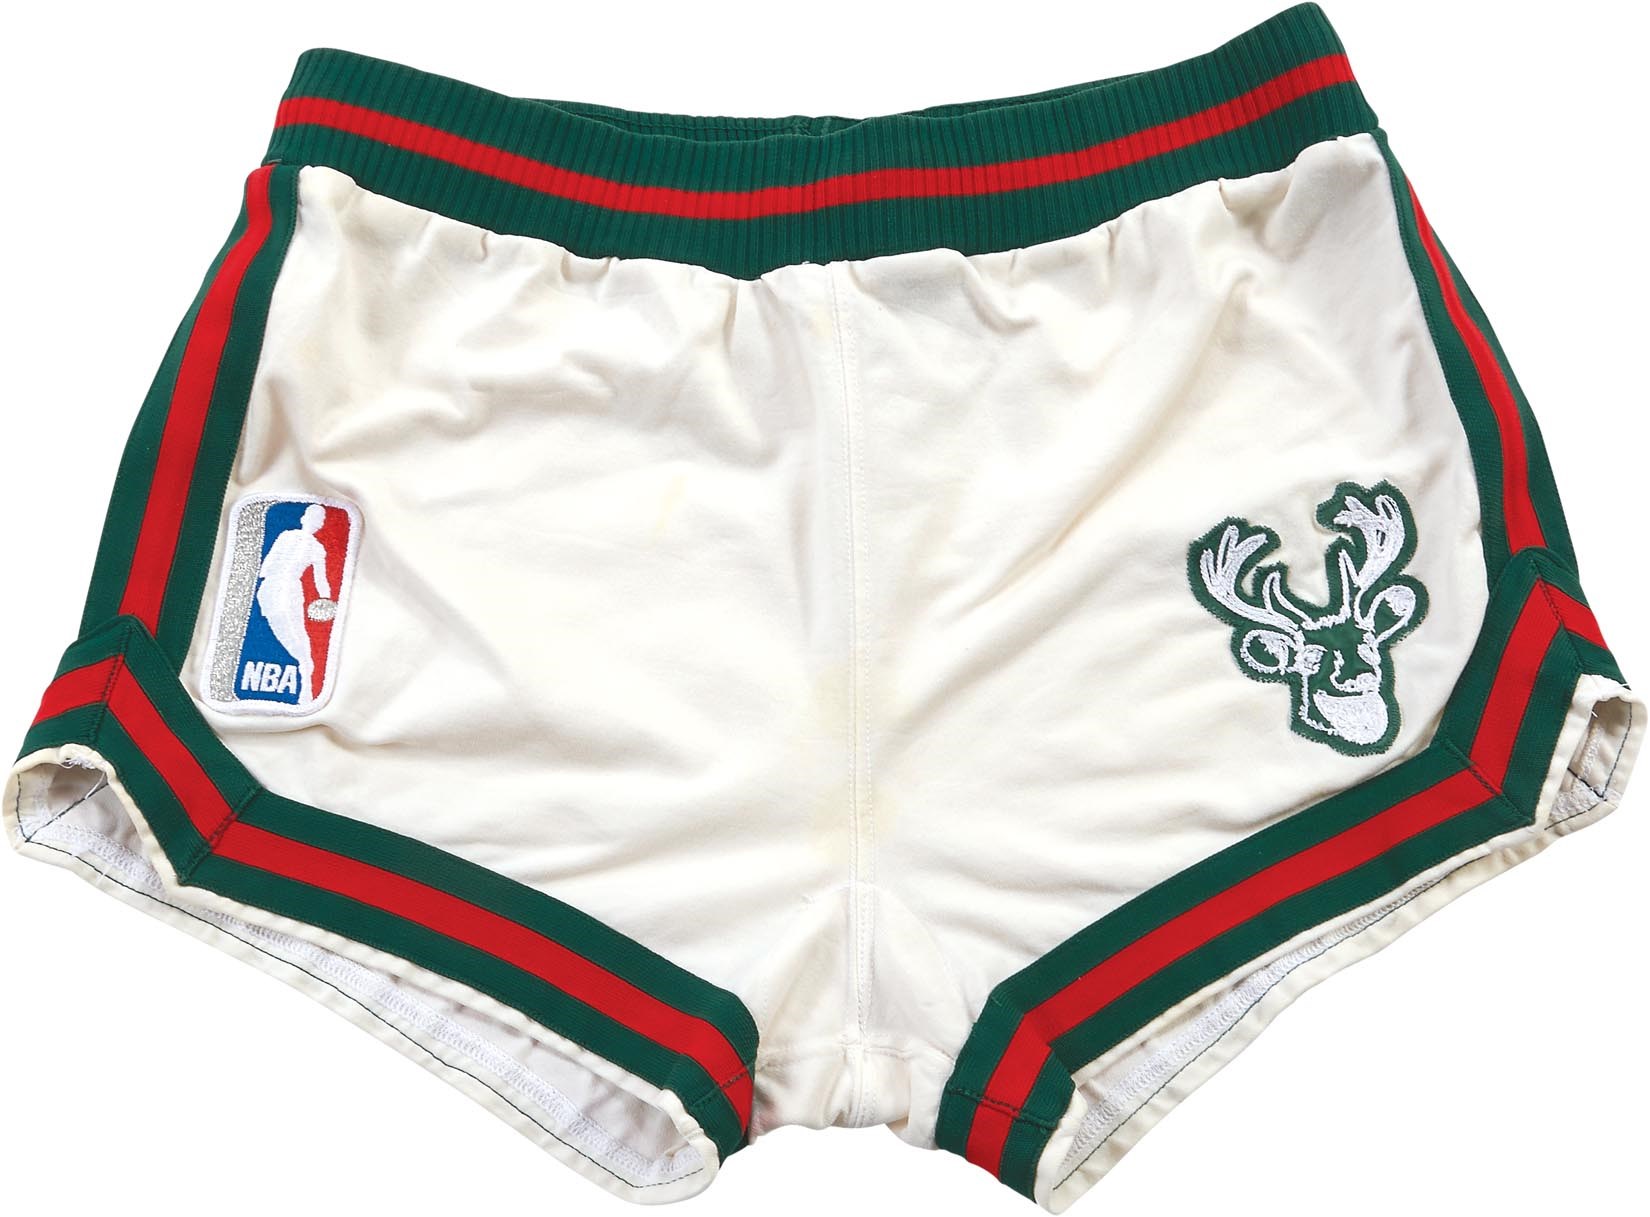 - Early 1970s Oscar Robertson Milwaukee Bucks Game Worn Shorts